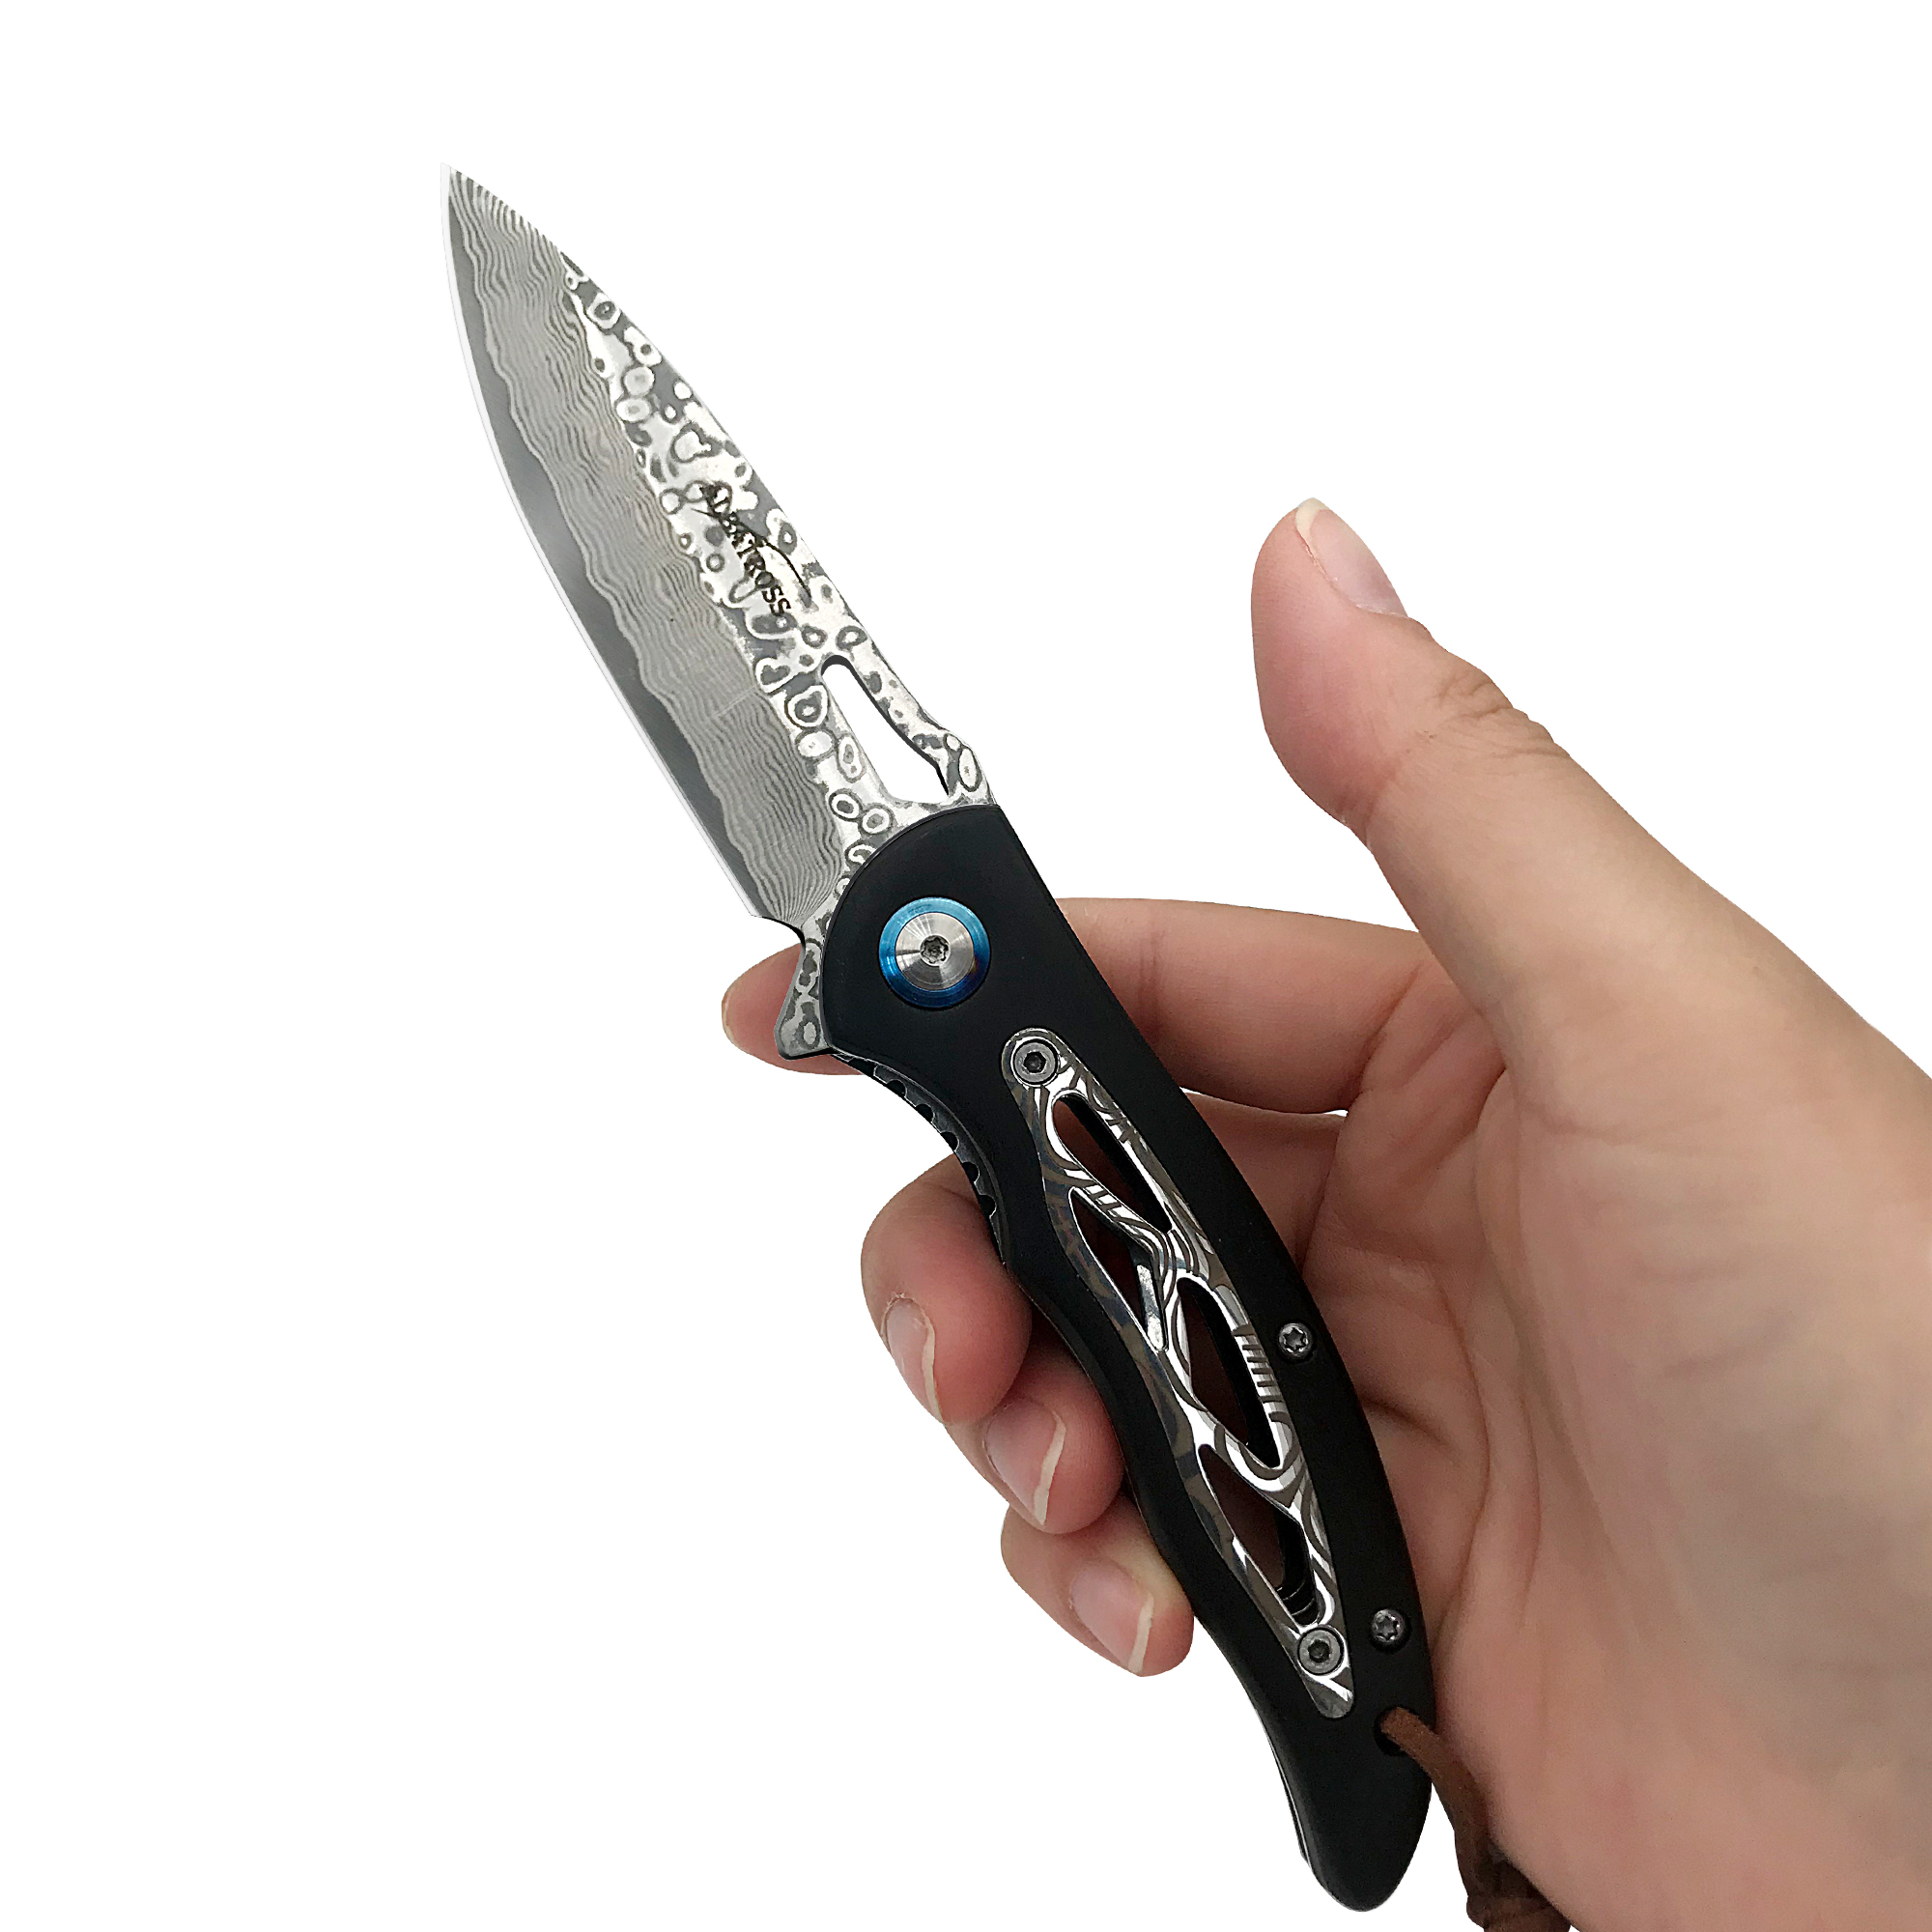 ALBATROSS Black Cool EDC Damascus Steel Folding Pocket Knife with Ebony Wood Handle for Camping Hiking